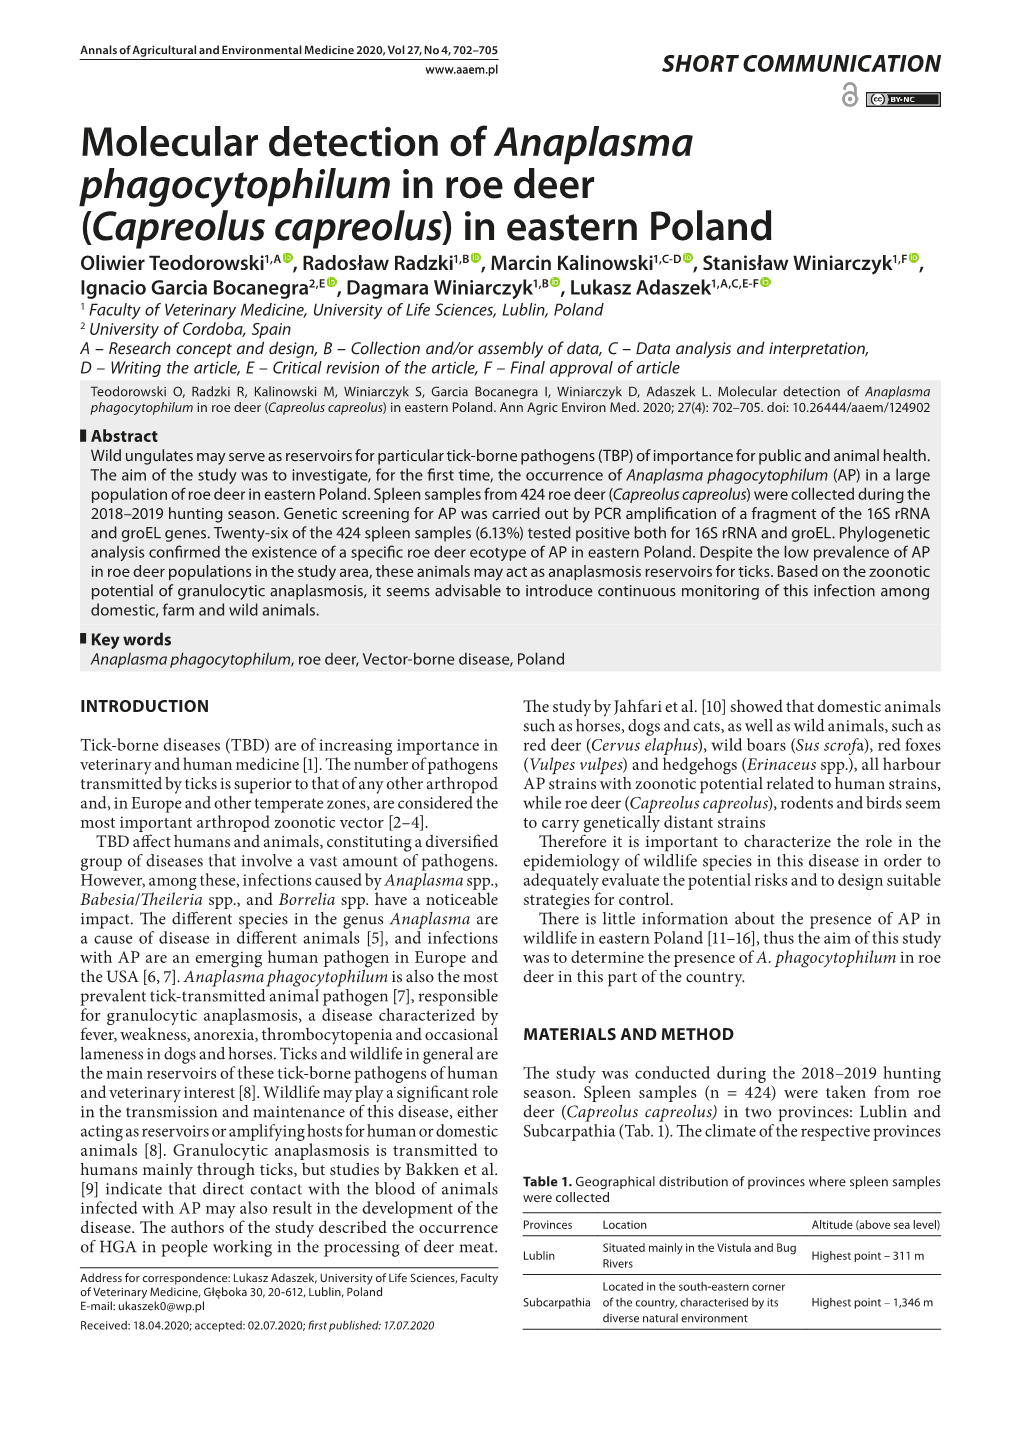 Molecular Detection of Anaplasma Phagocytophilum in Roe Deer (Capreolus Capreolus) in Eastern Poland